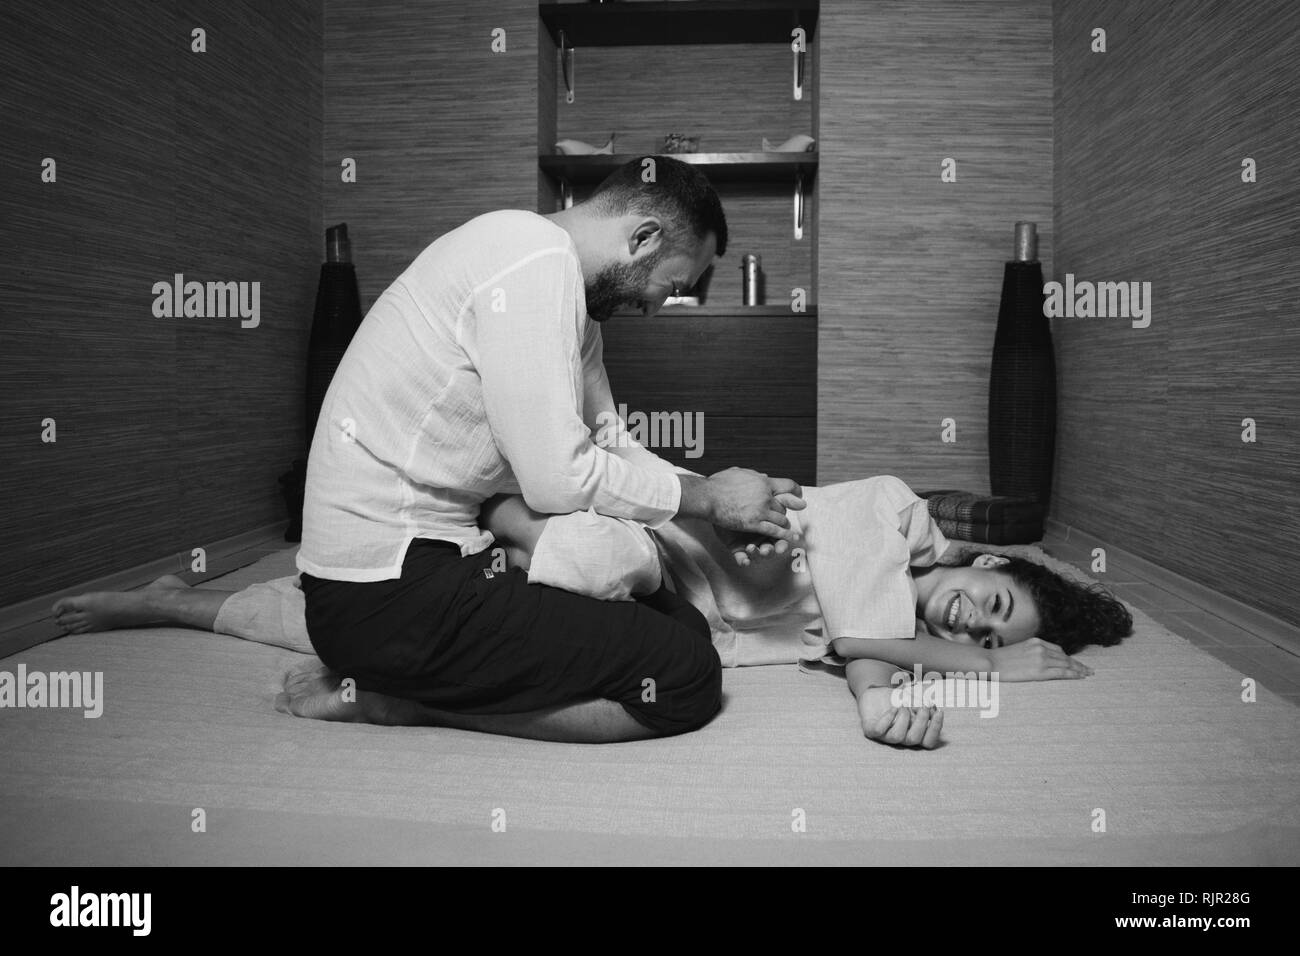 Tibetan massage. The massage therapist makes a Tibetan massage to a young woman. man and woman in white doing gymnastics Stock Photo